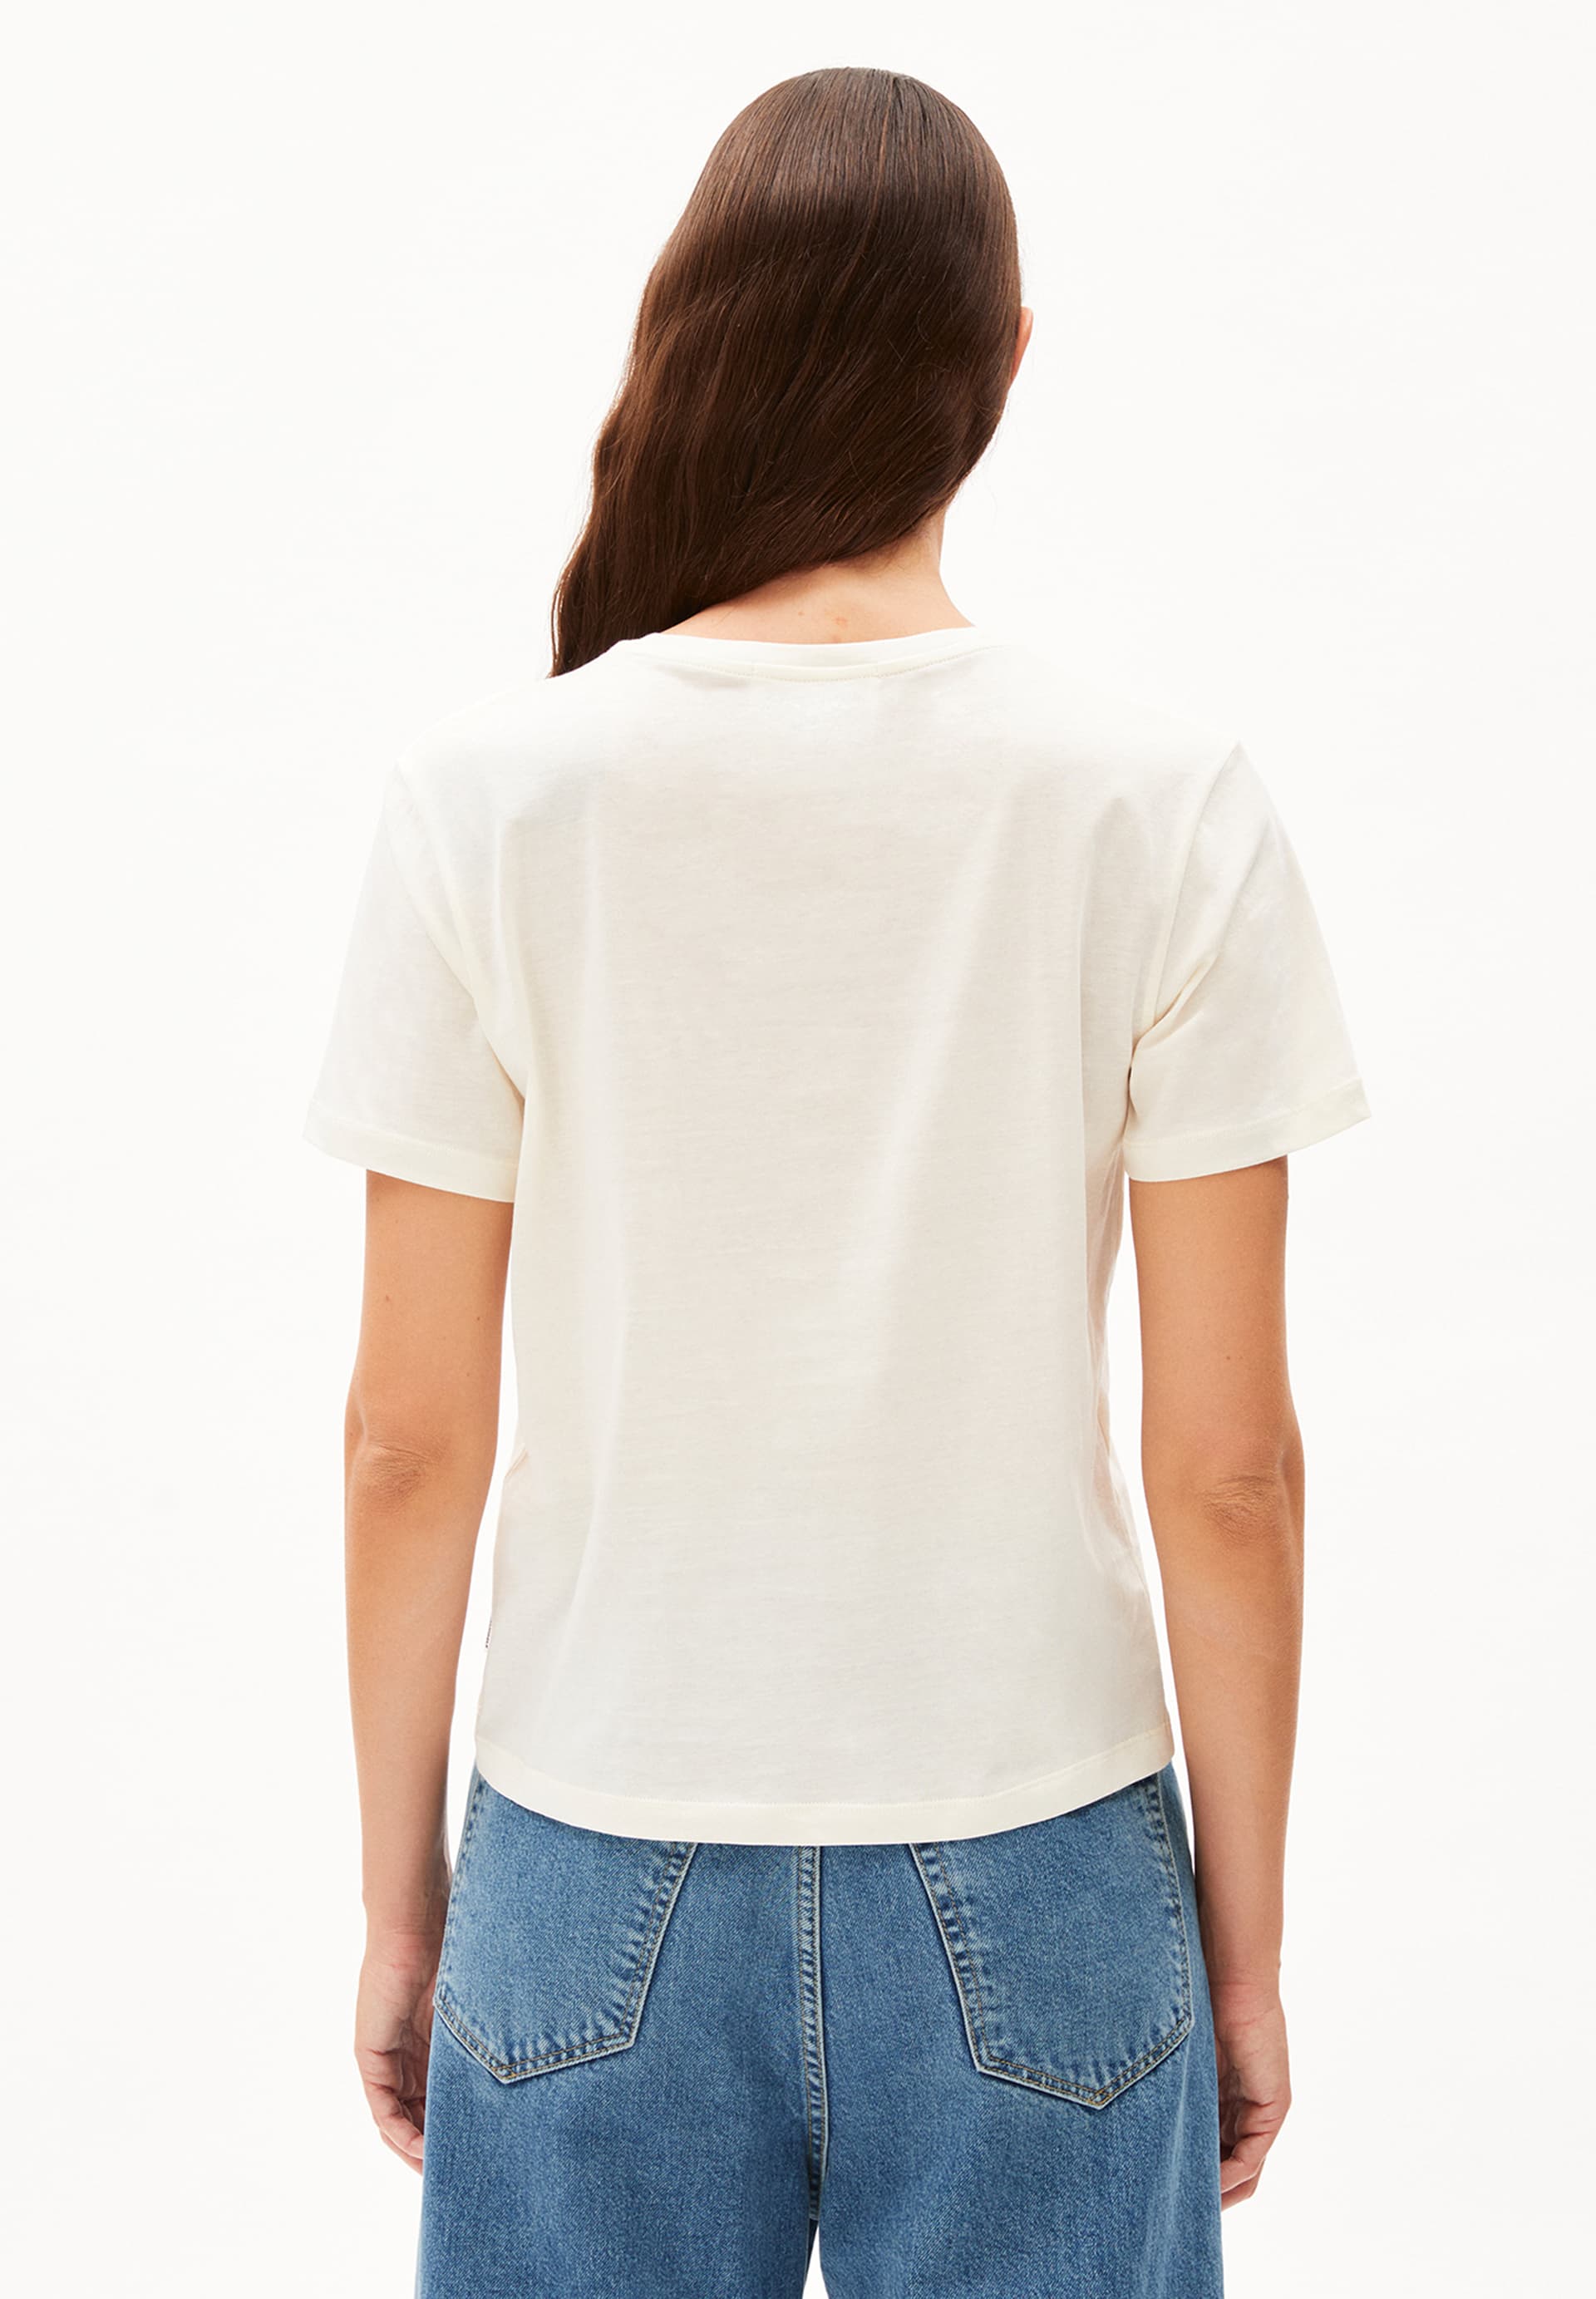 MAARLA LITAA T-Shirt Relaxed Fit made of Organic Cotton